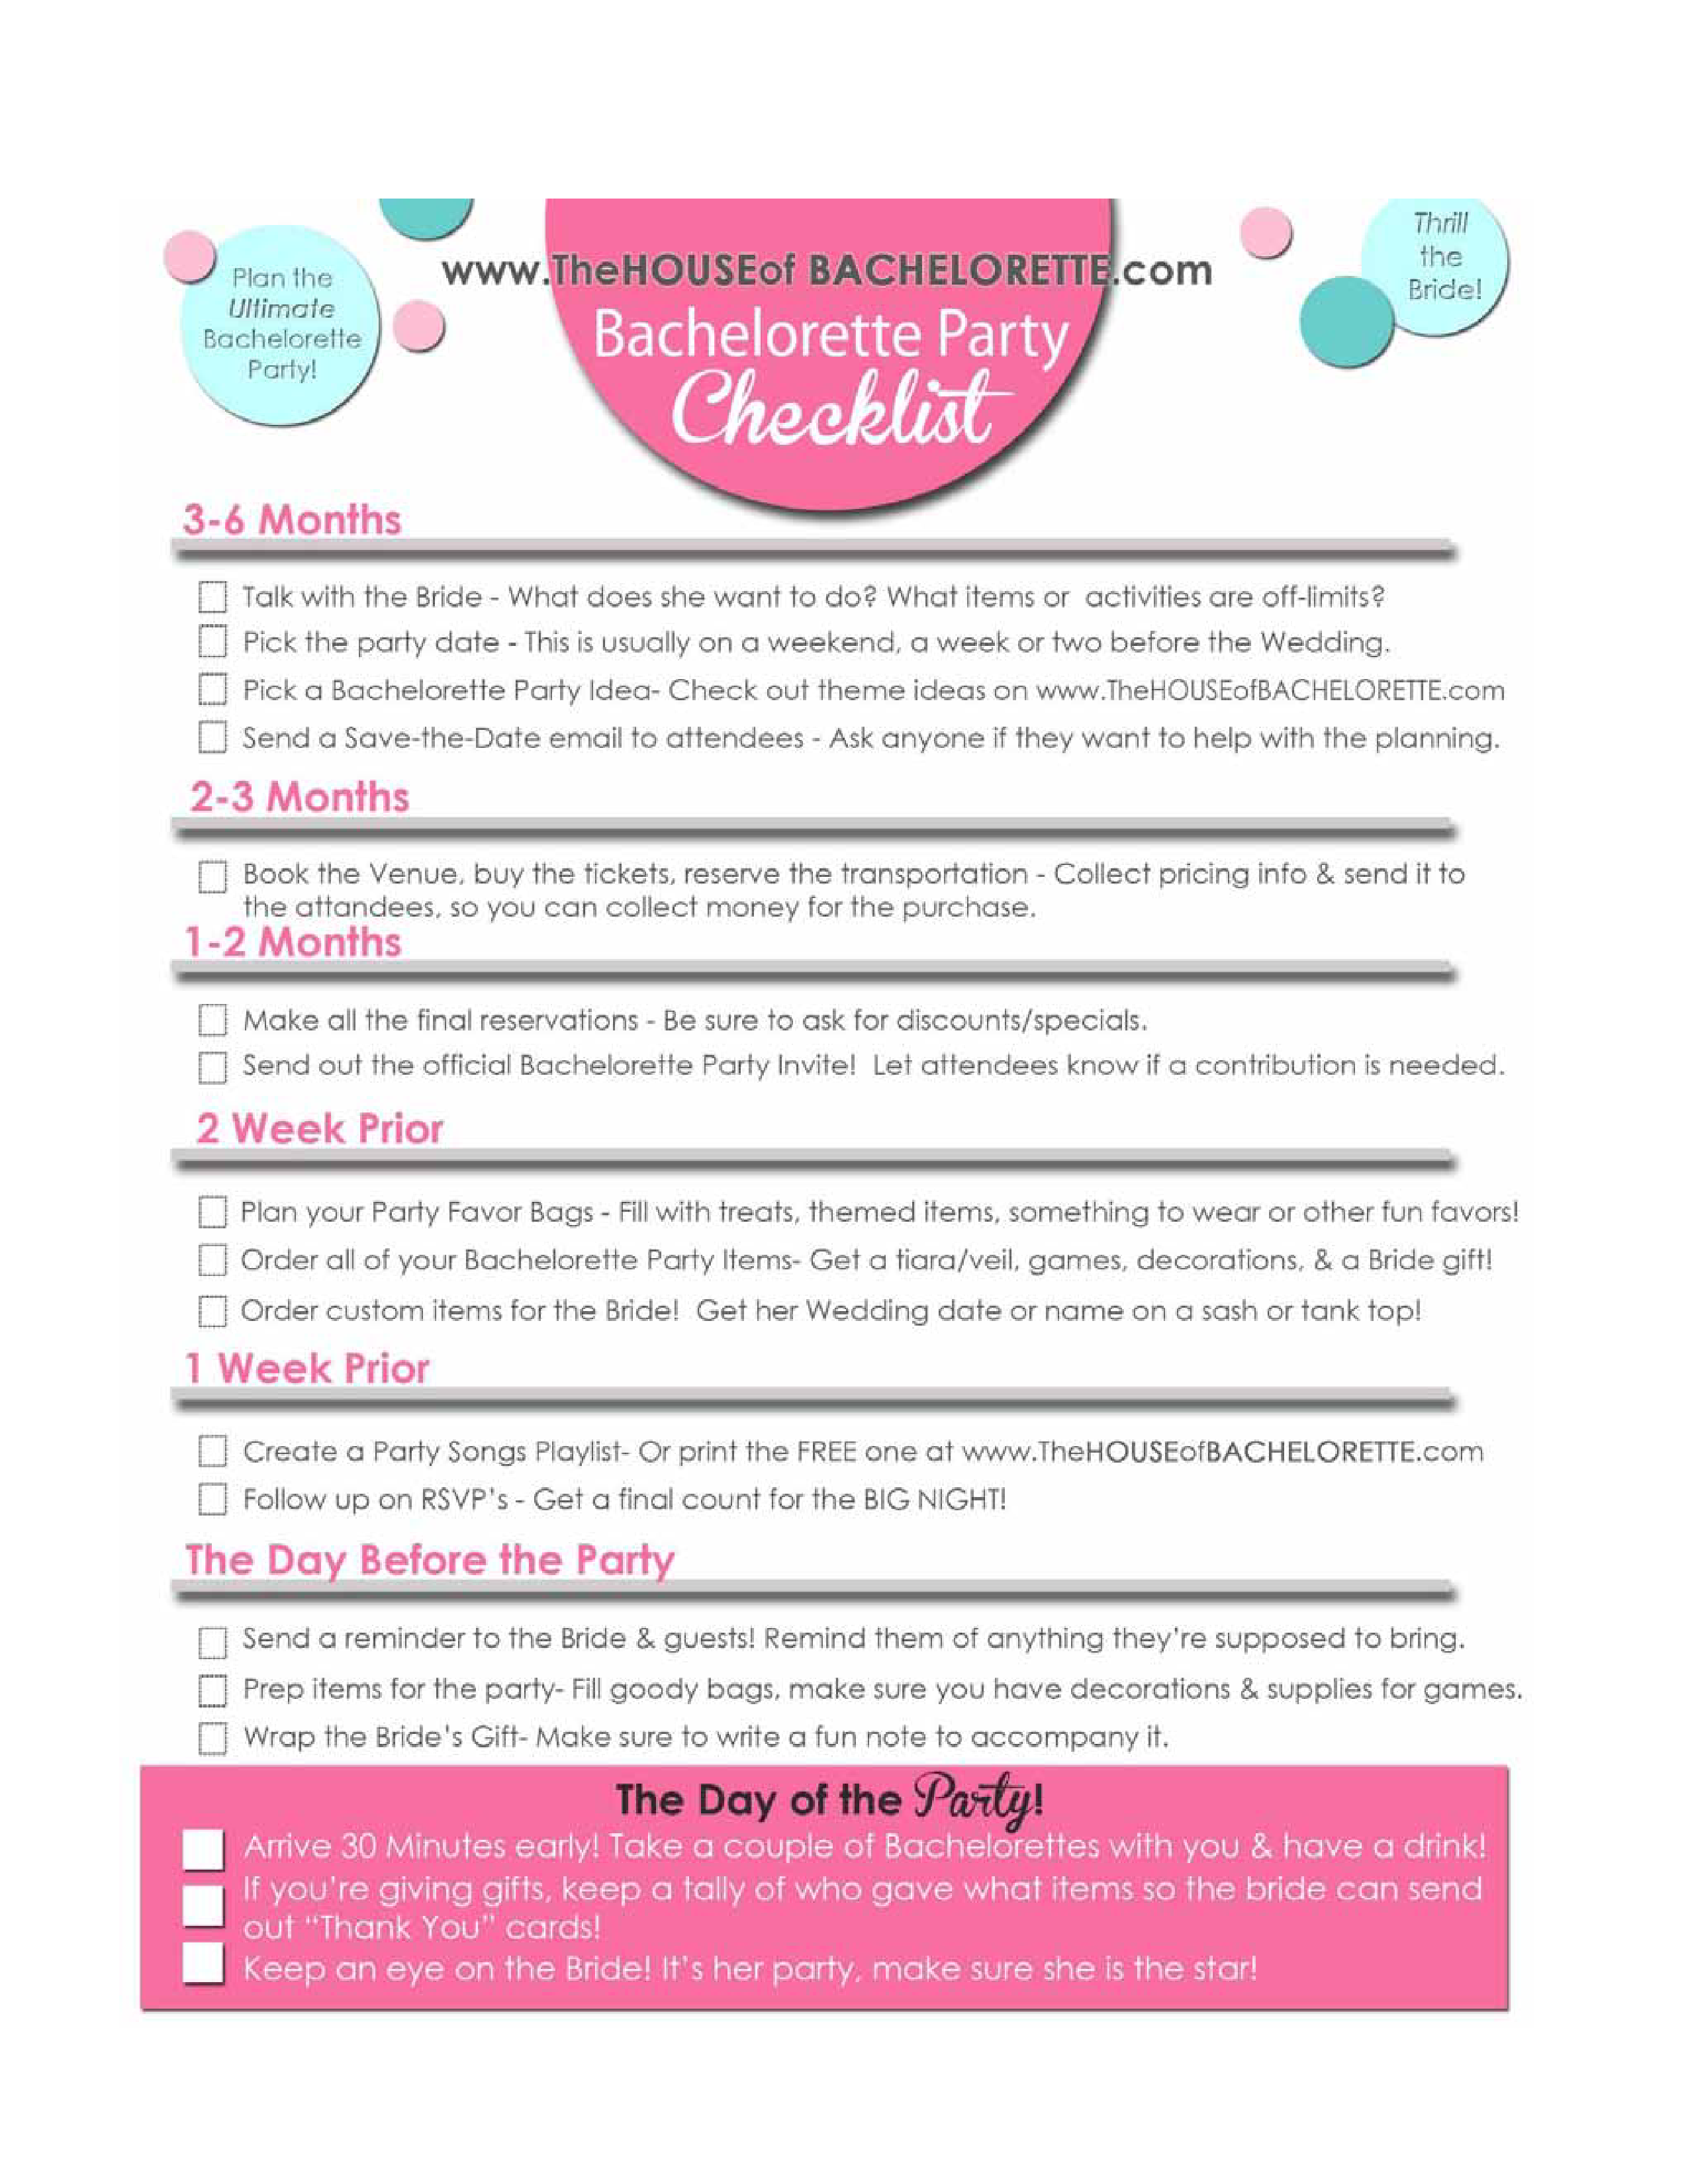 bachelorette party checklist plantilla imagen principal